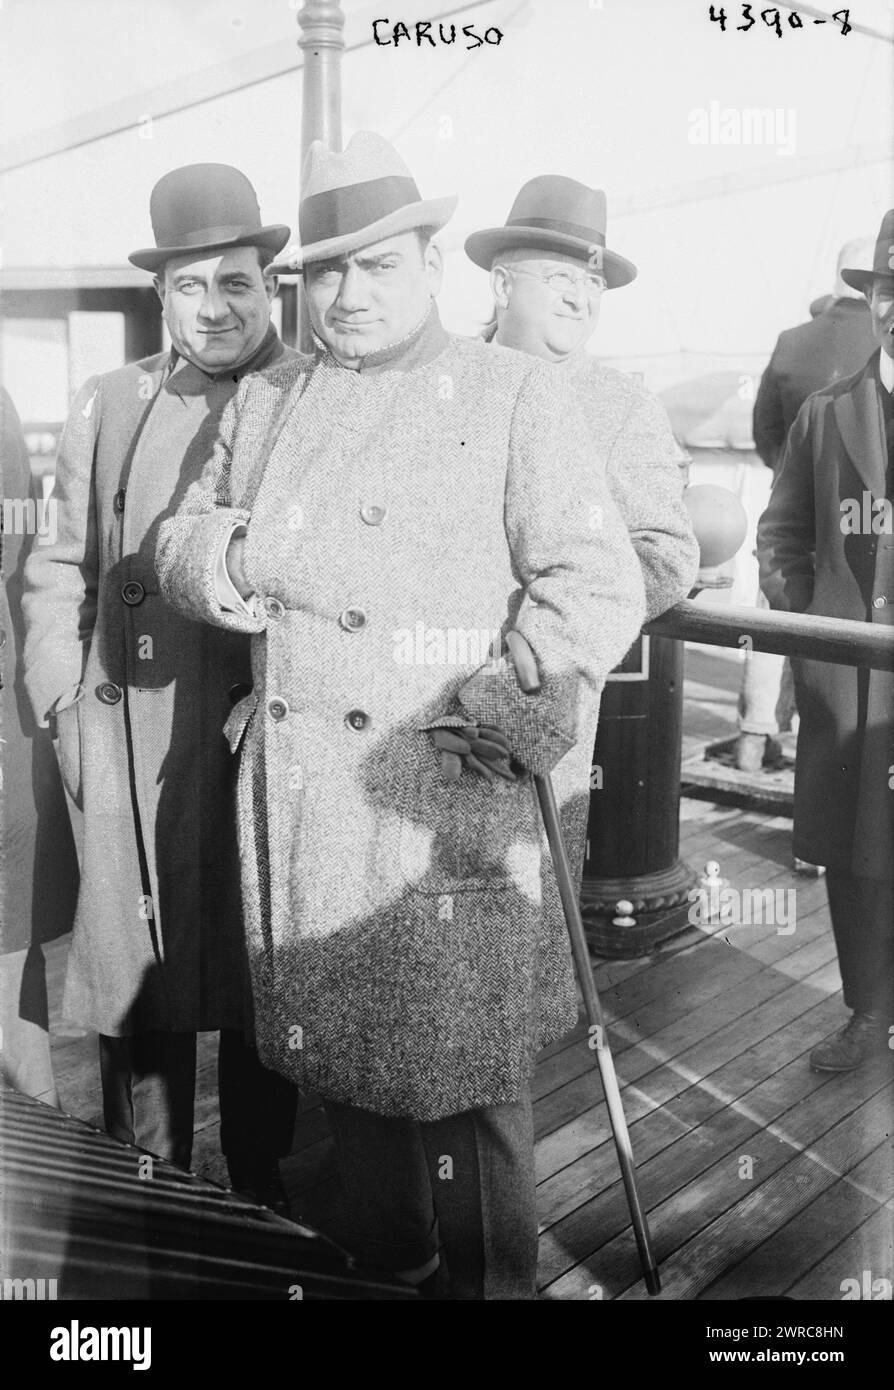 Caruso, Photograph shows Italian tenor opera singer Enrico Caruso (1873-1921) arriving in New York City on the ship S.S. Saga, Nov. 4, 1917., 1917 Nov. 4, Glass negatives, 1 negative: glass Stock Photo